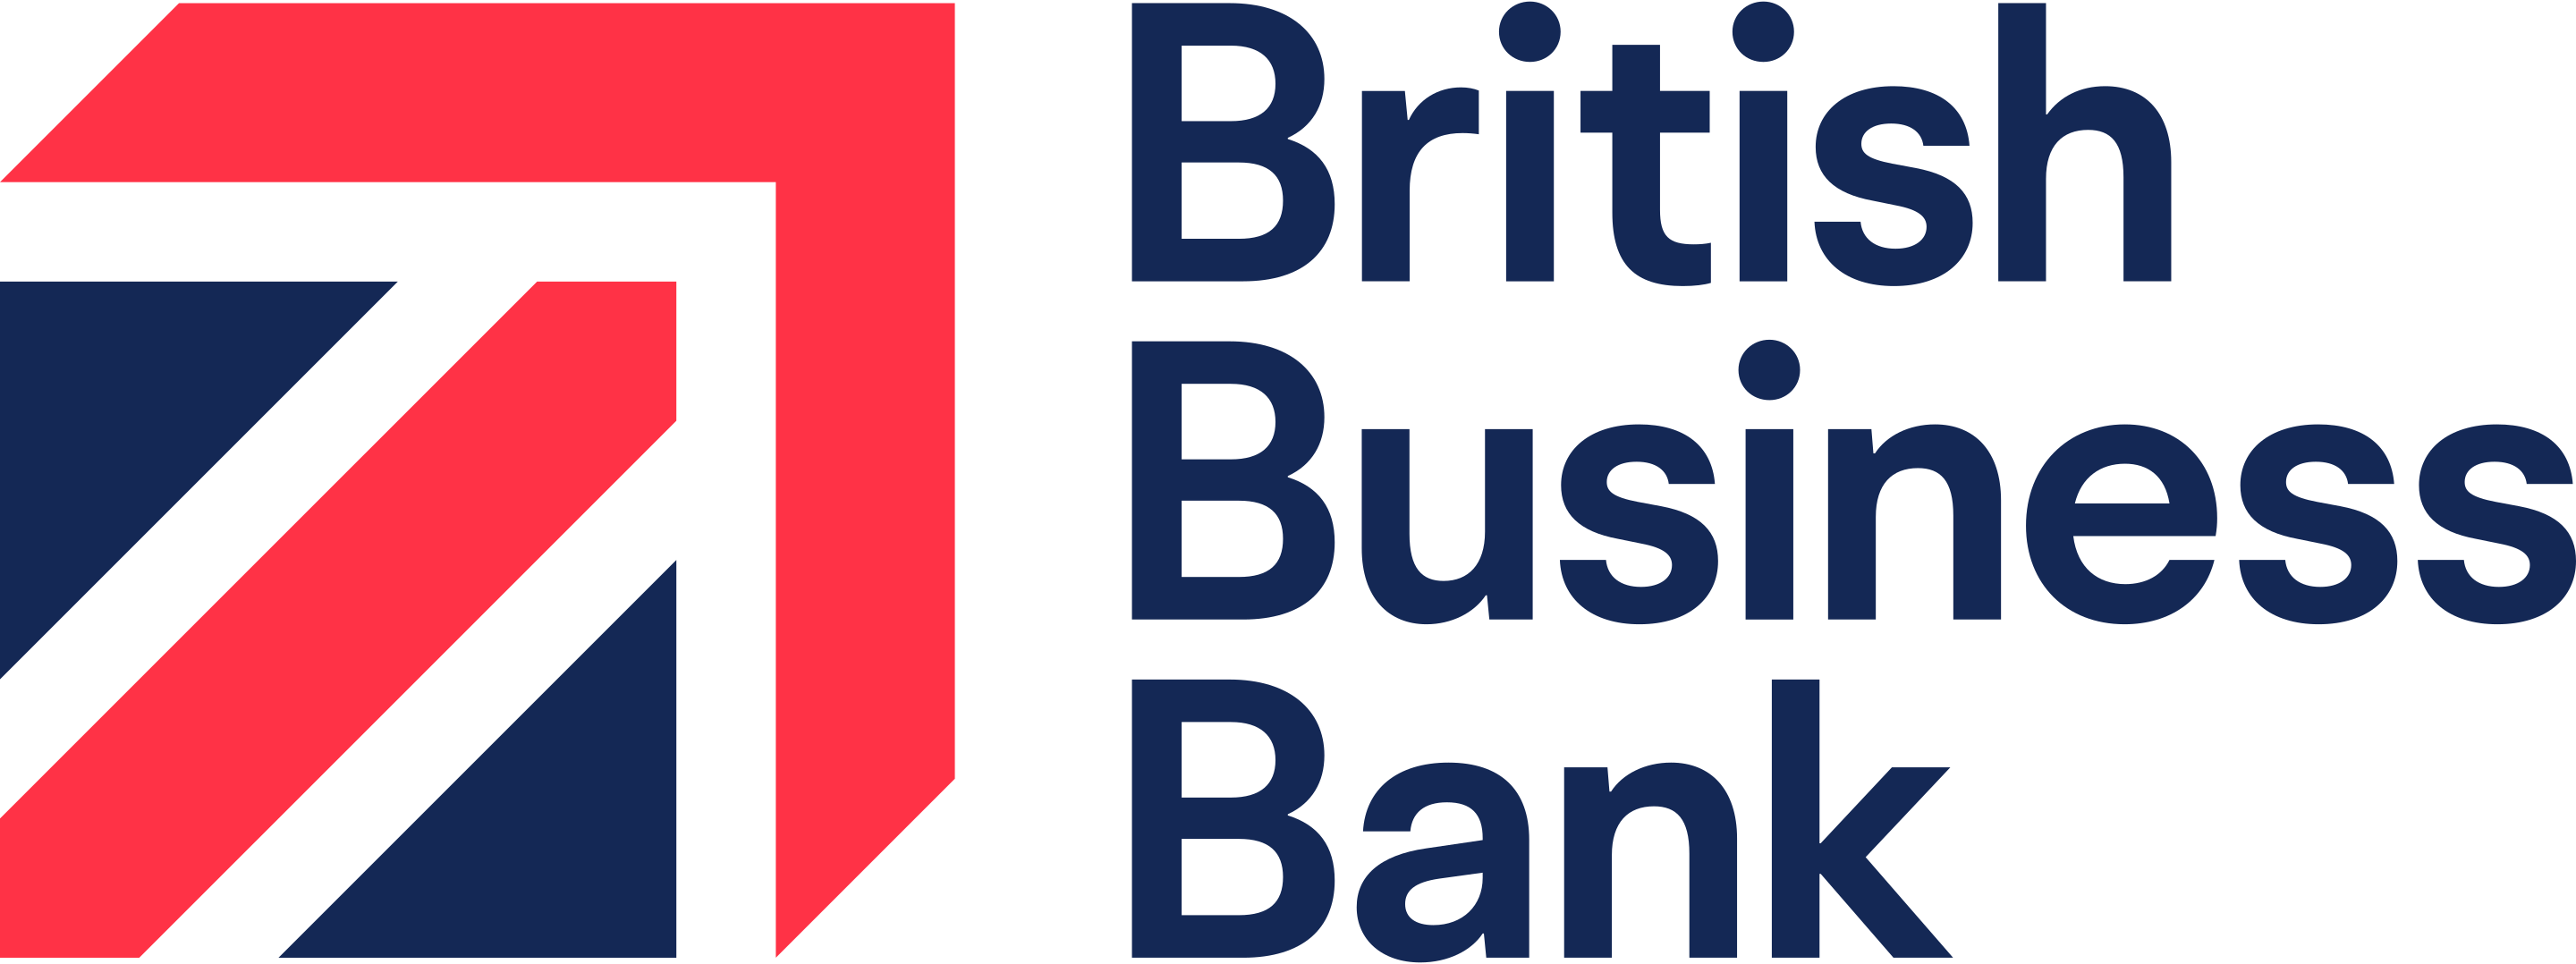 British business bank logo.svg